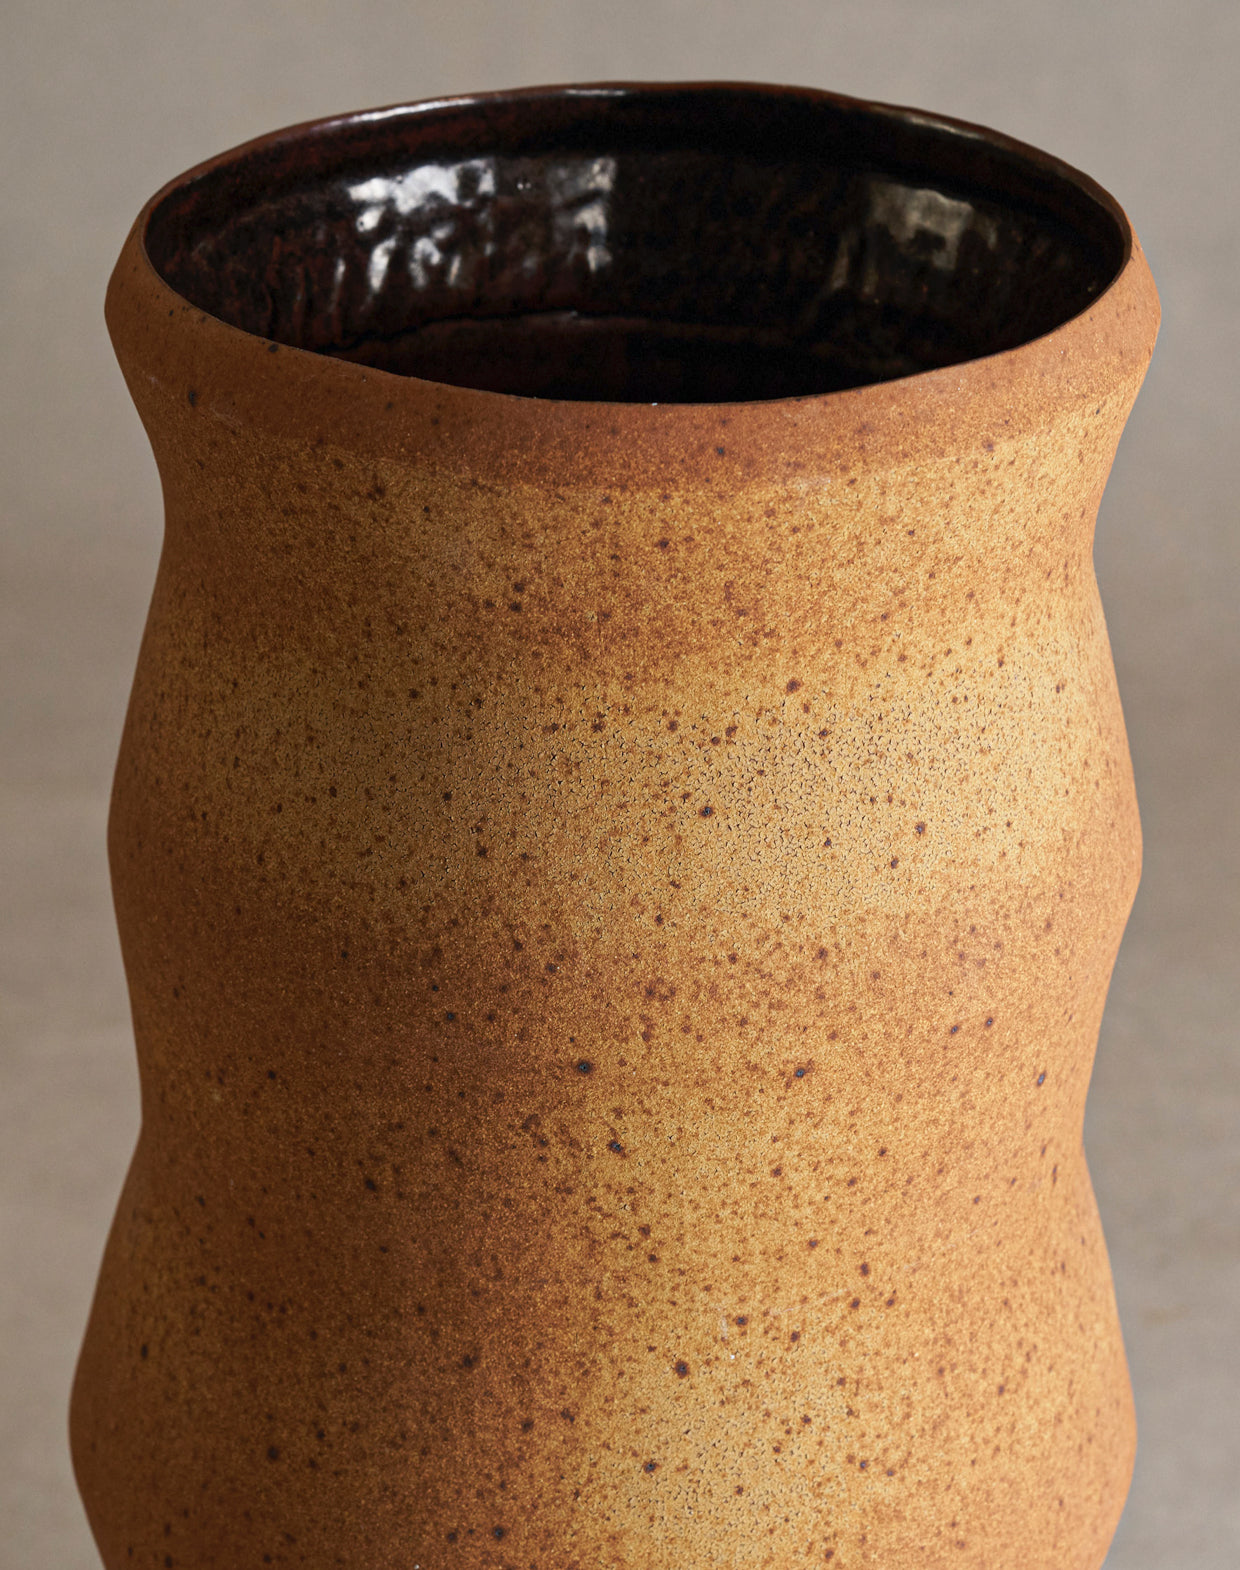 Rick Hintze Coiled Stoneware Vessel, "Untitled" No. 12